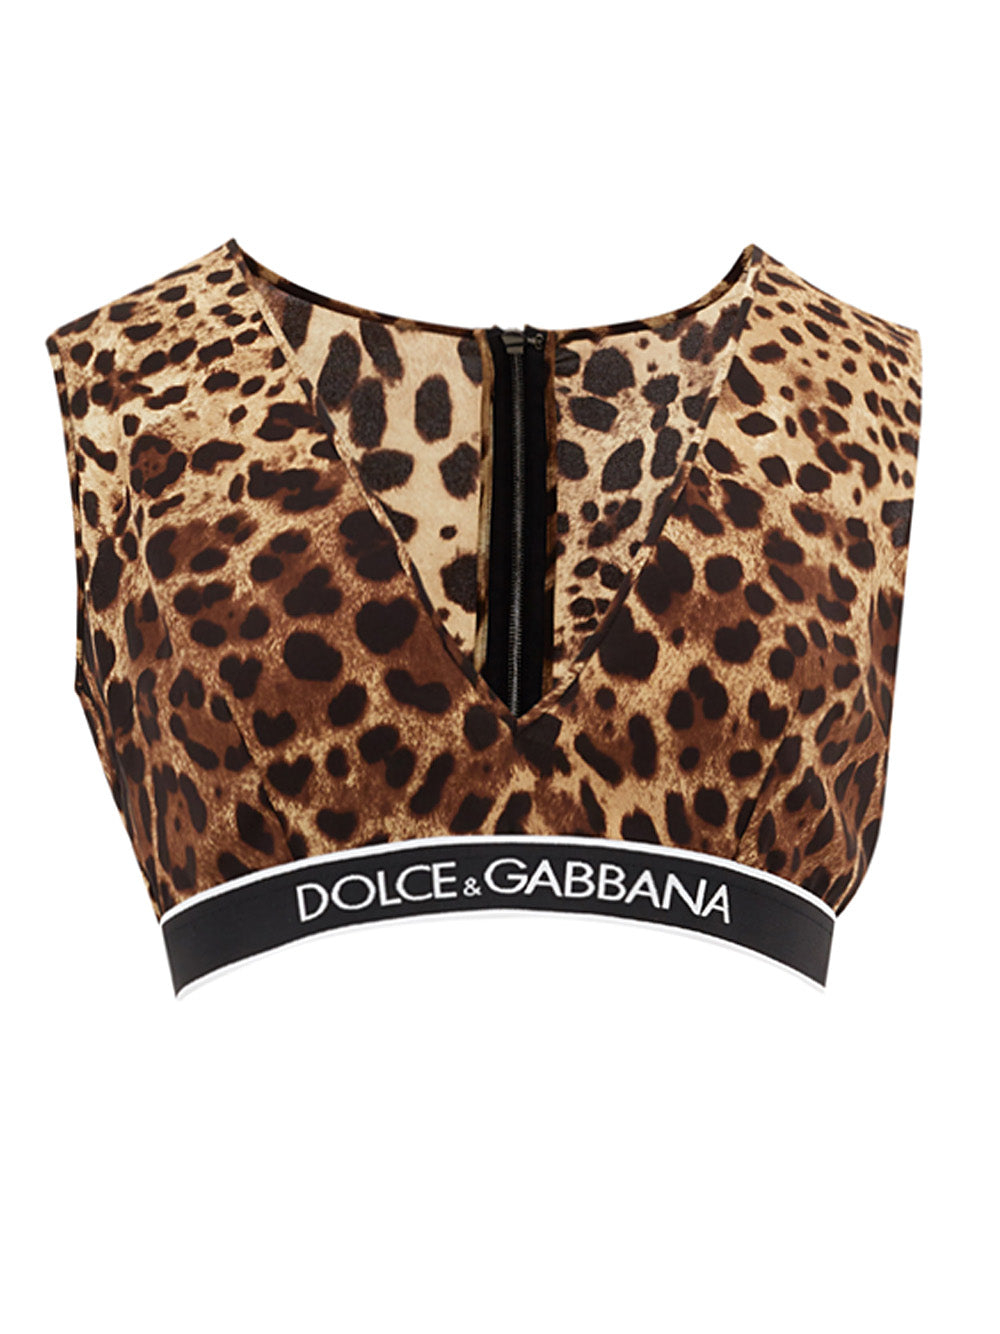 Dolce & Gabbana Brun Leopard Bluse Top